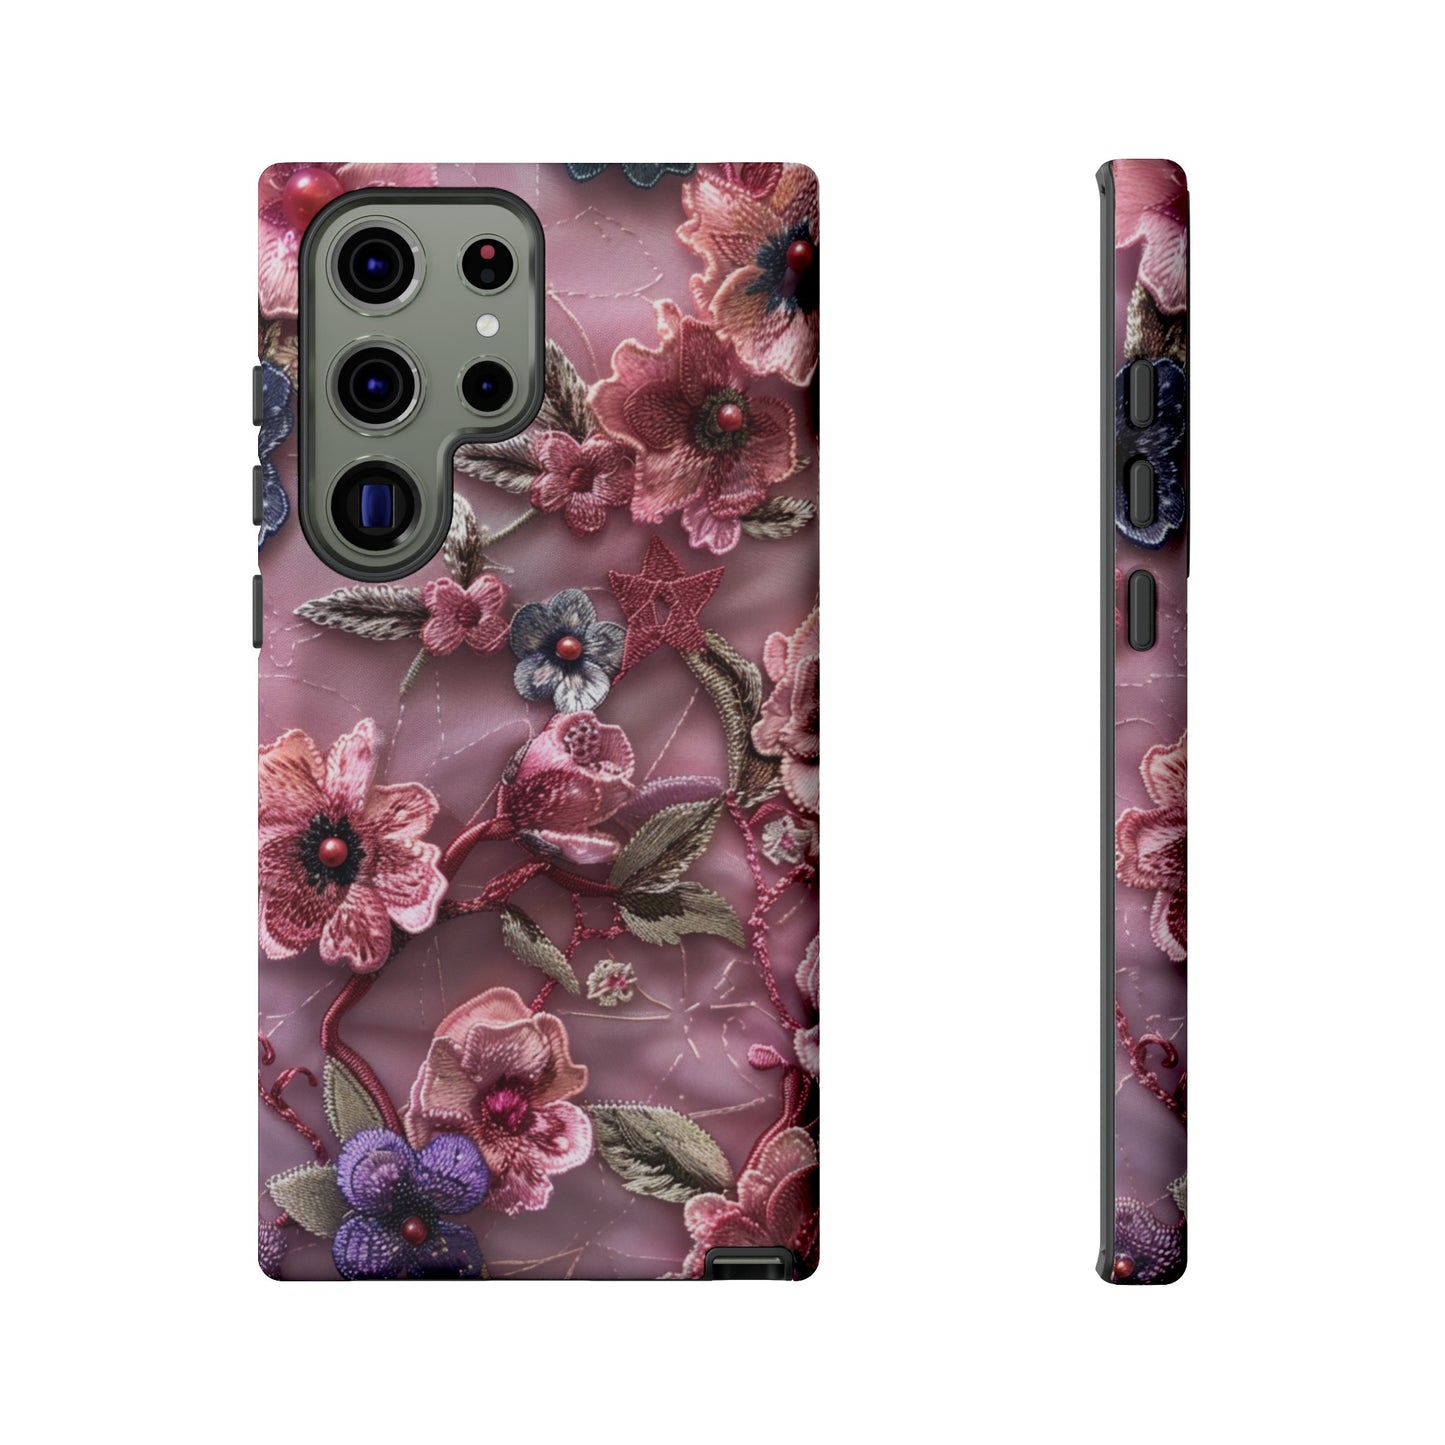 Coquette Aesthetic Floral Art Phone Case